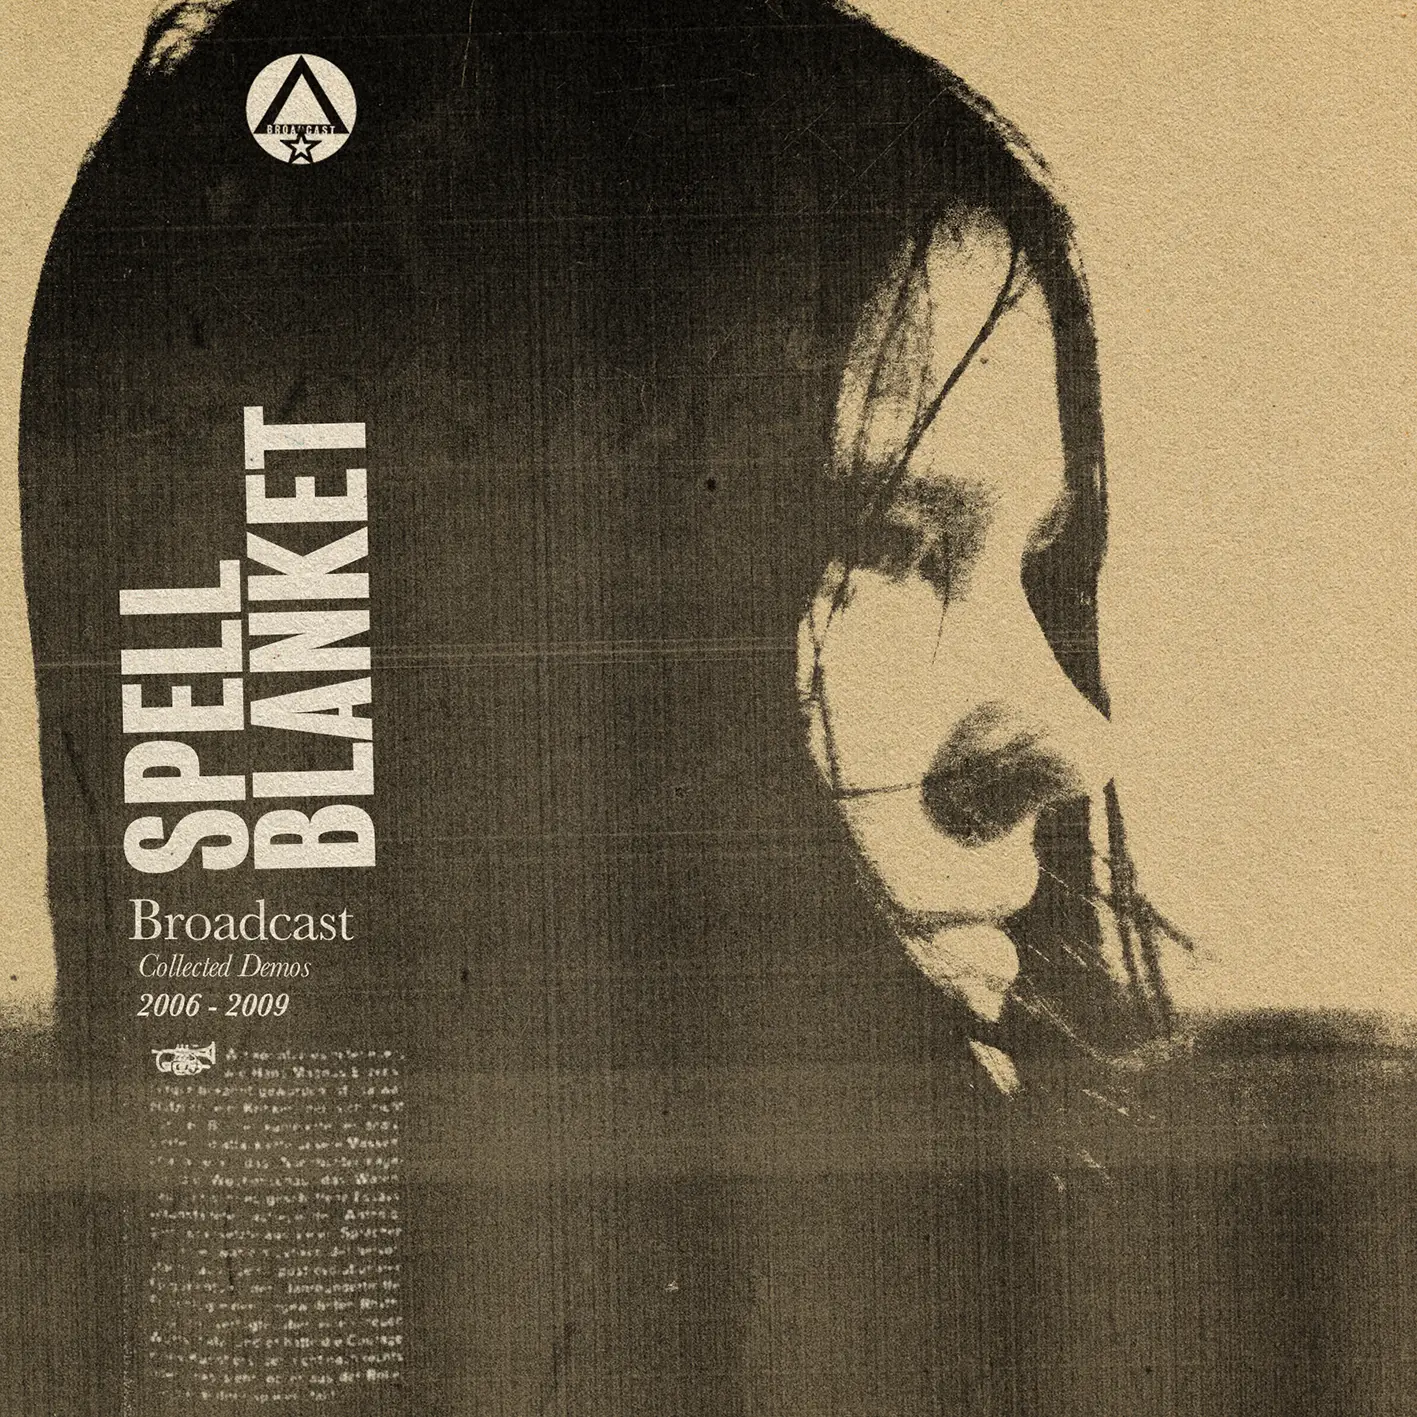 Broadcast | Black 2xVinyl LP | Spell Blanket - Collected Demos